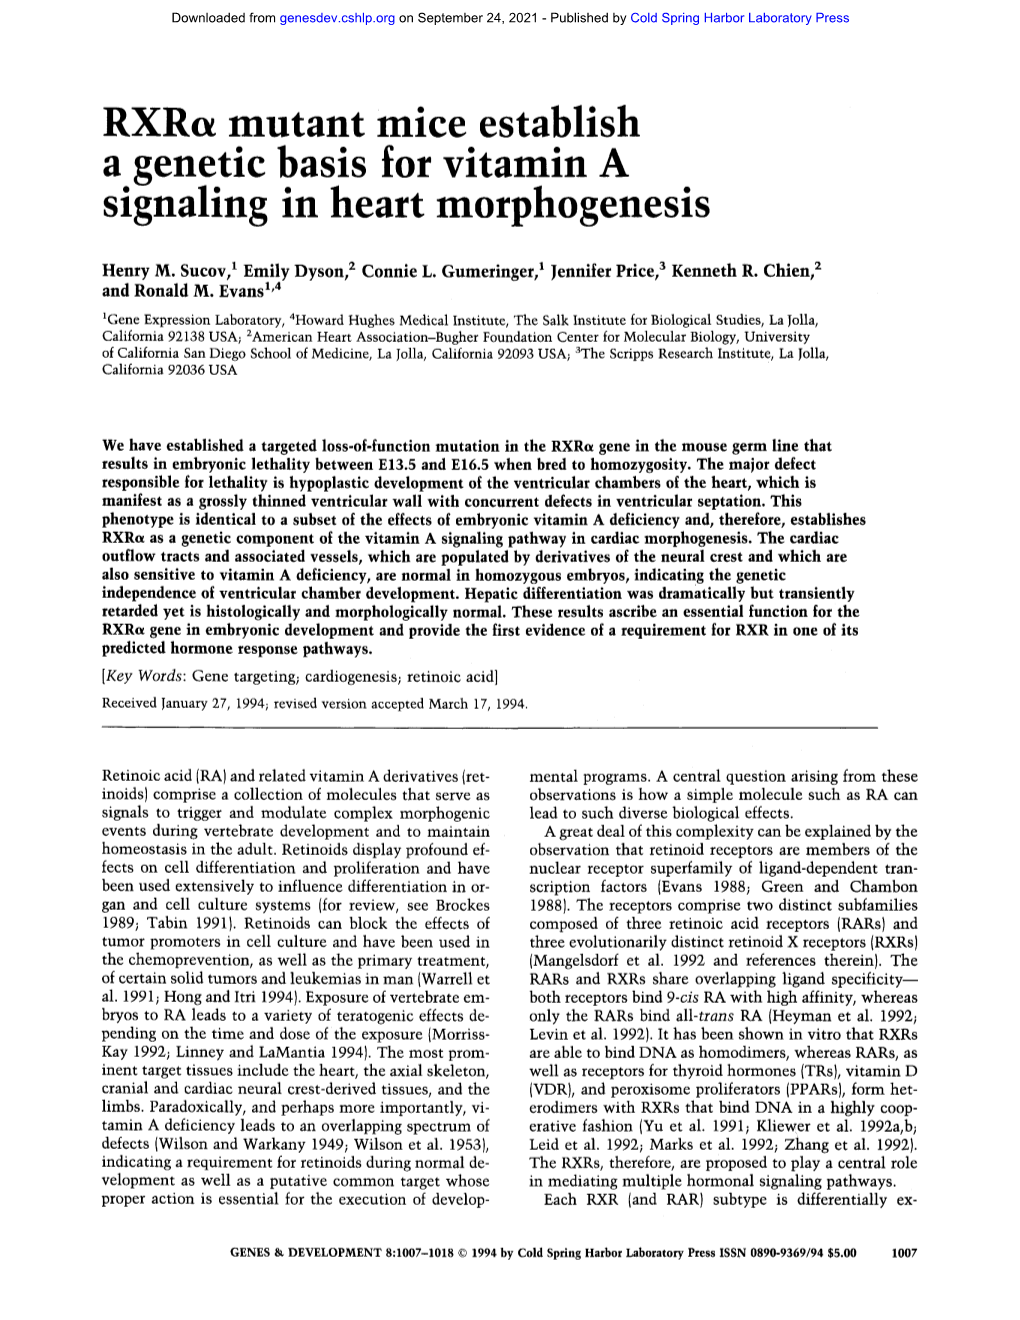 Rxra Mutant Mice Establish a Genetic Basis for Vitamin a Signaling in Heart Morphogenesis